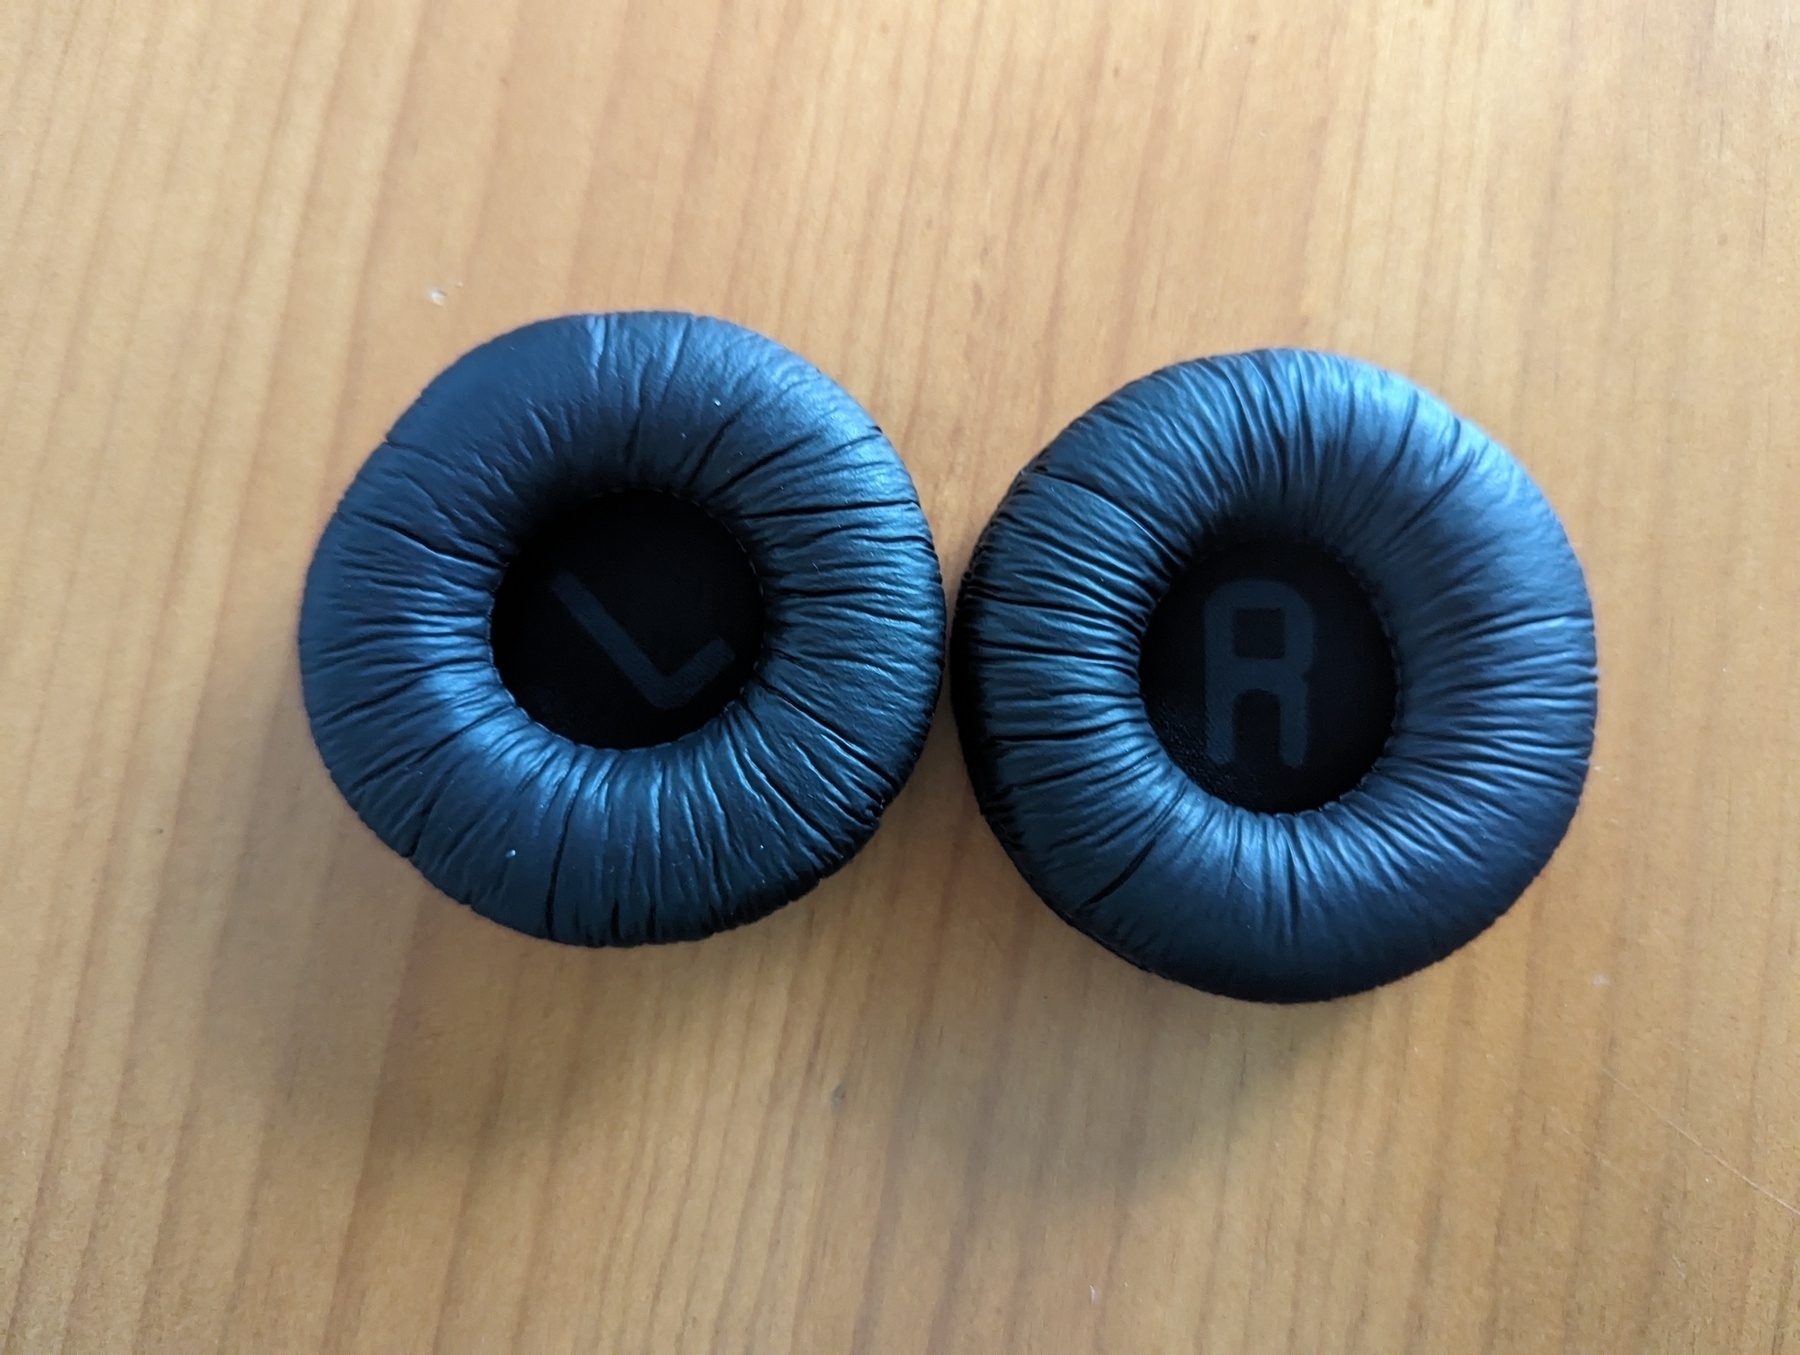 New set of ear-cups for a JBL E-series bluetooth headphones